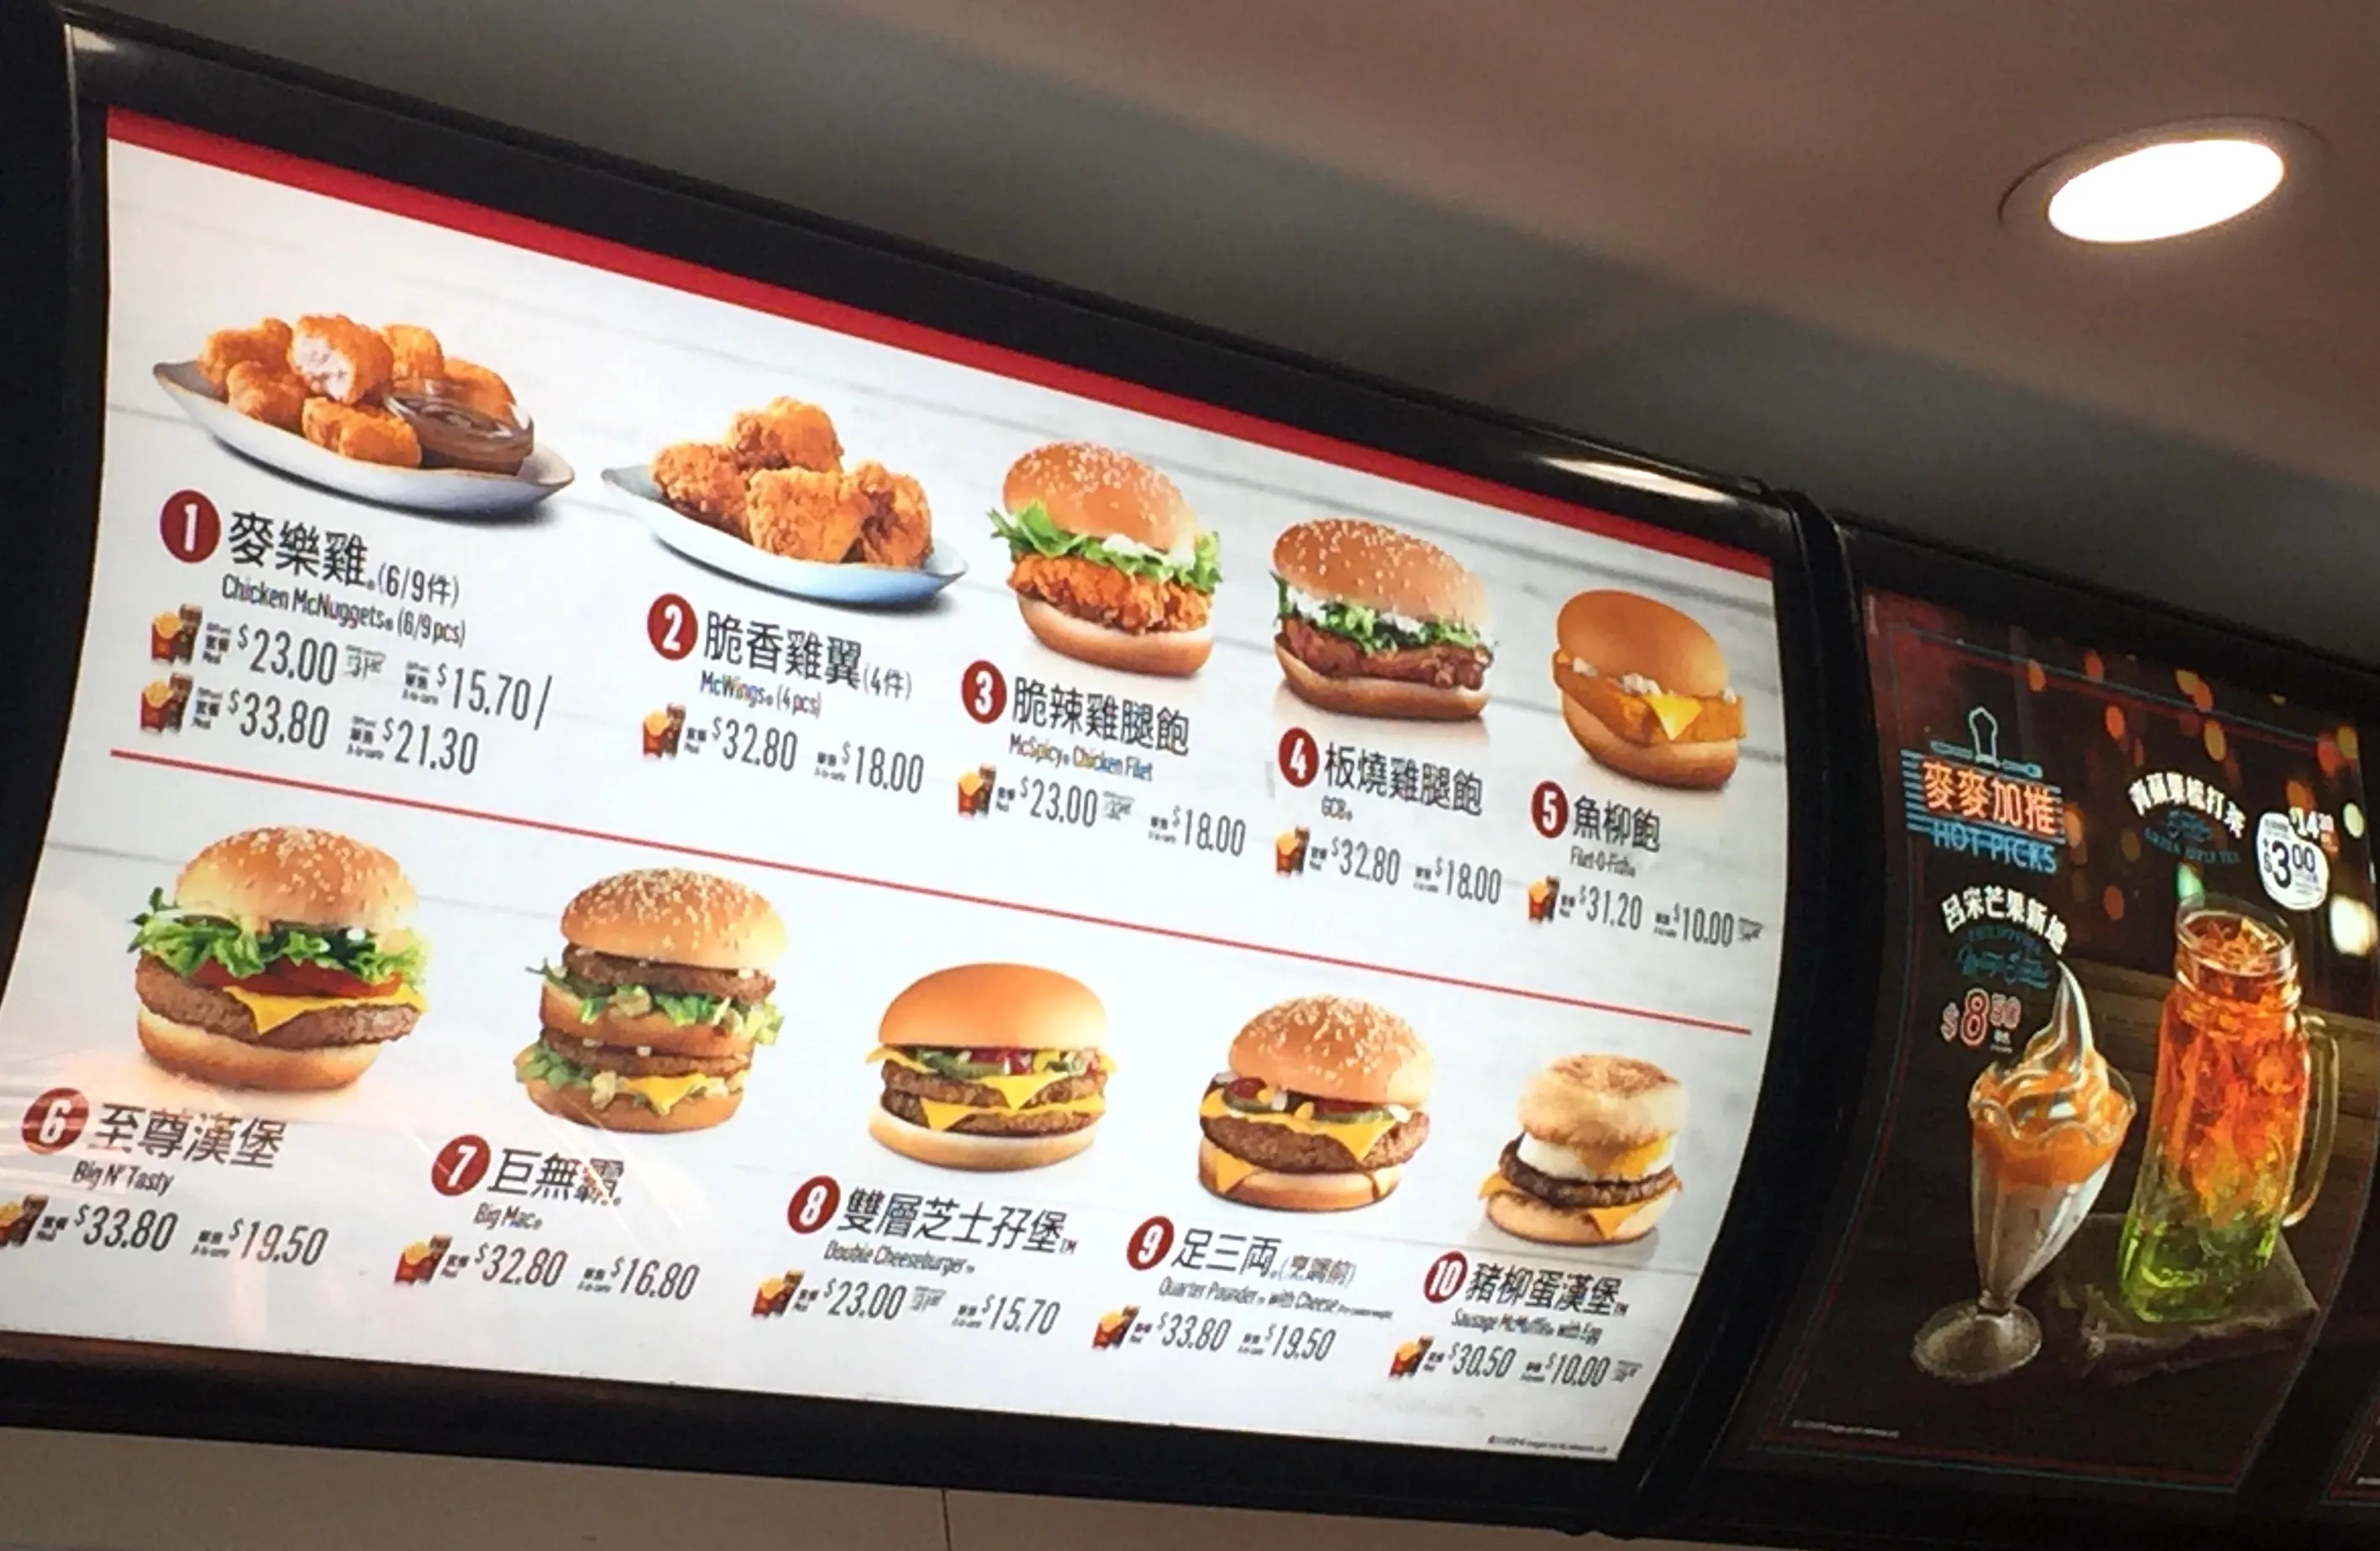 McDonald's menu in Hong Kong